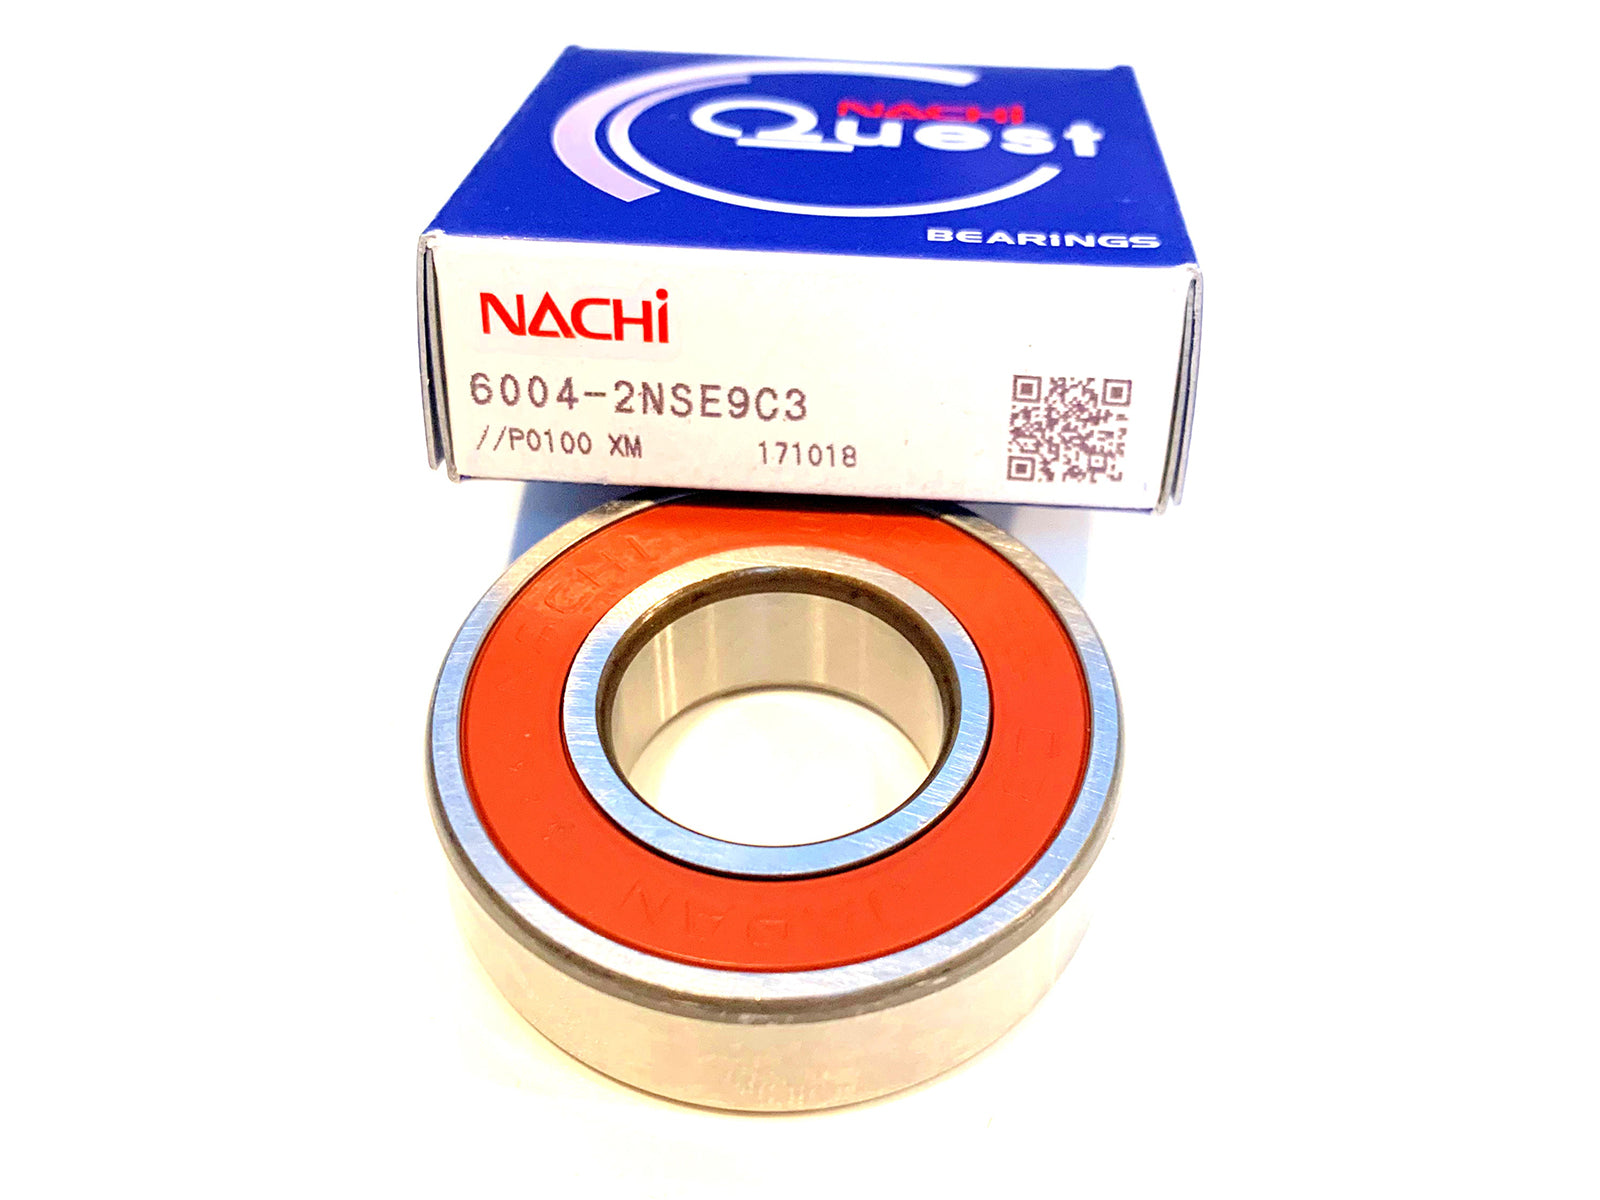 6004-2NSE9 C3 NACHI Ball Bearing - ppdistributors